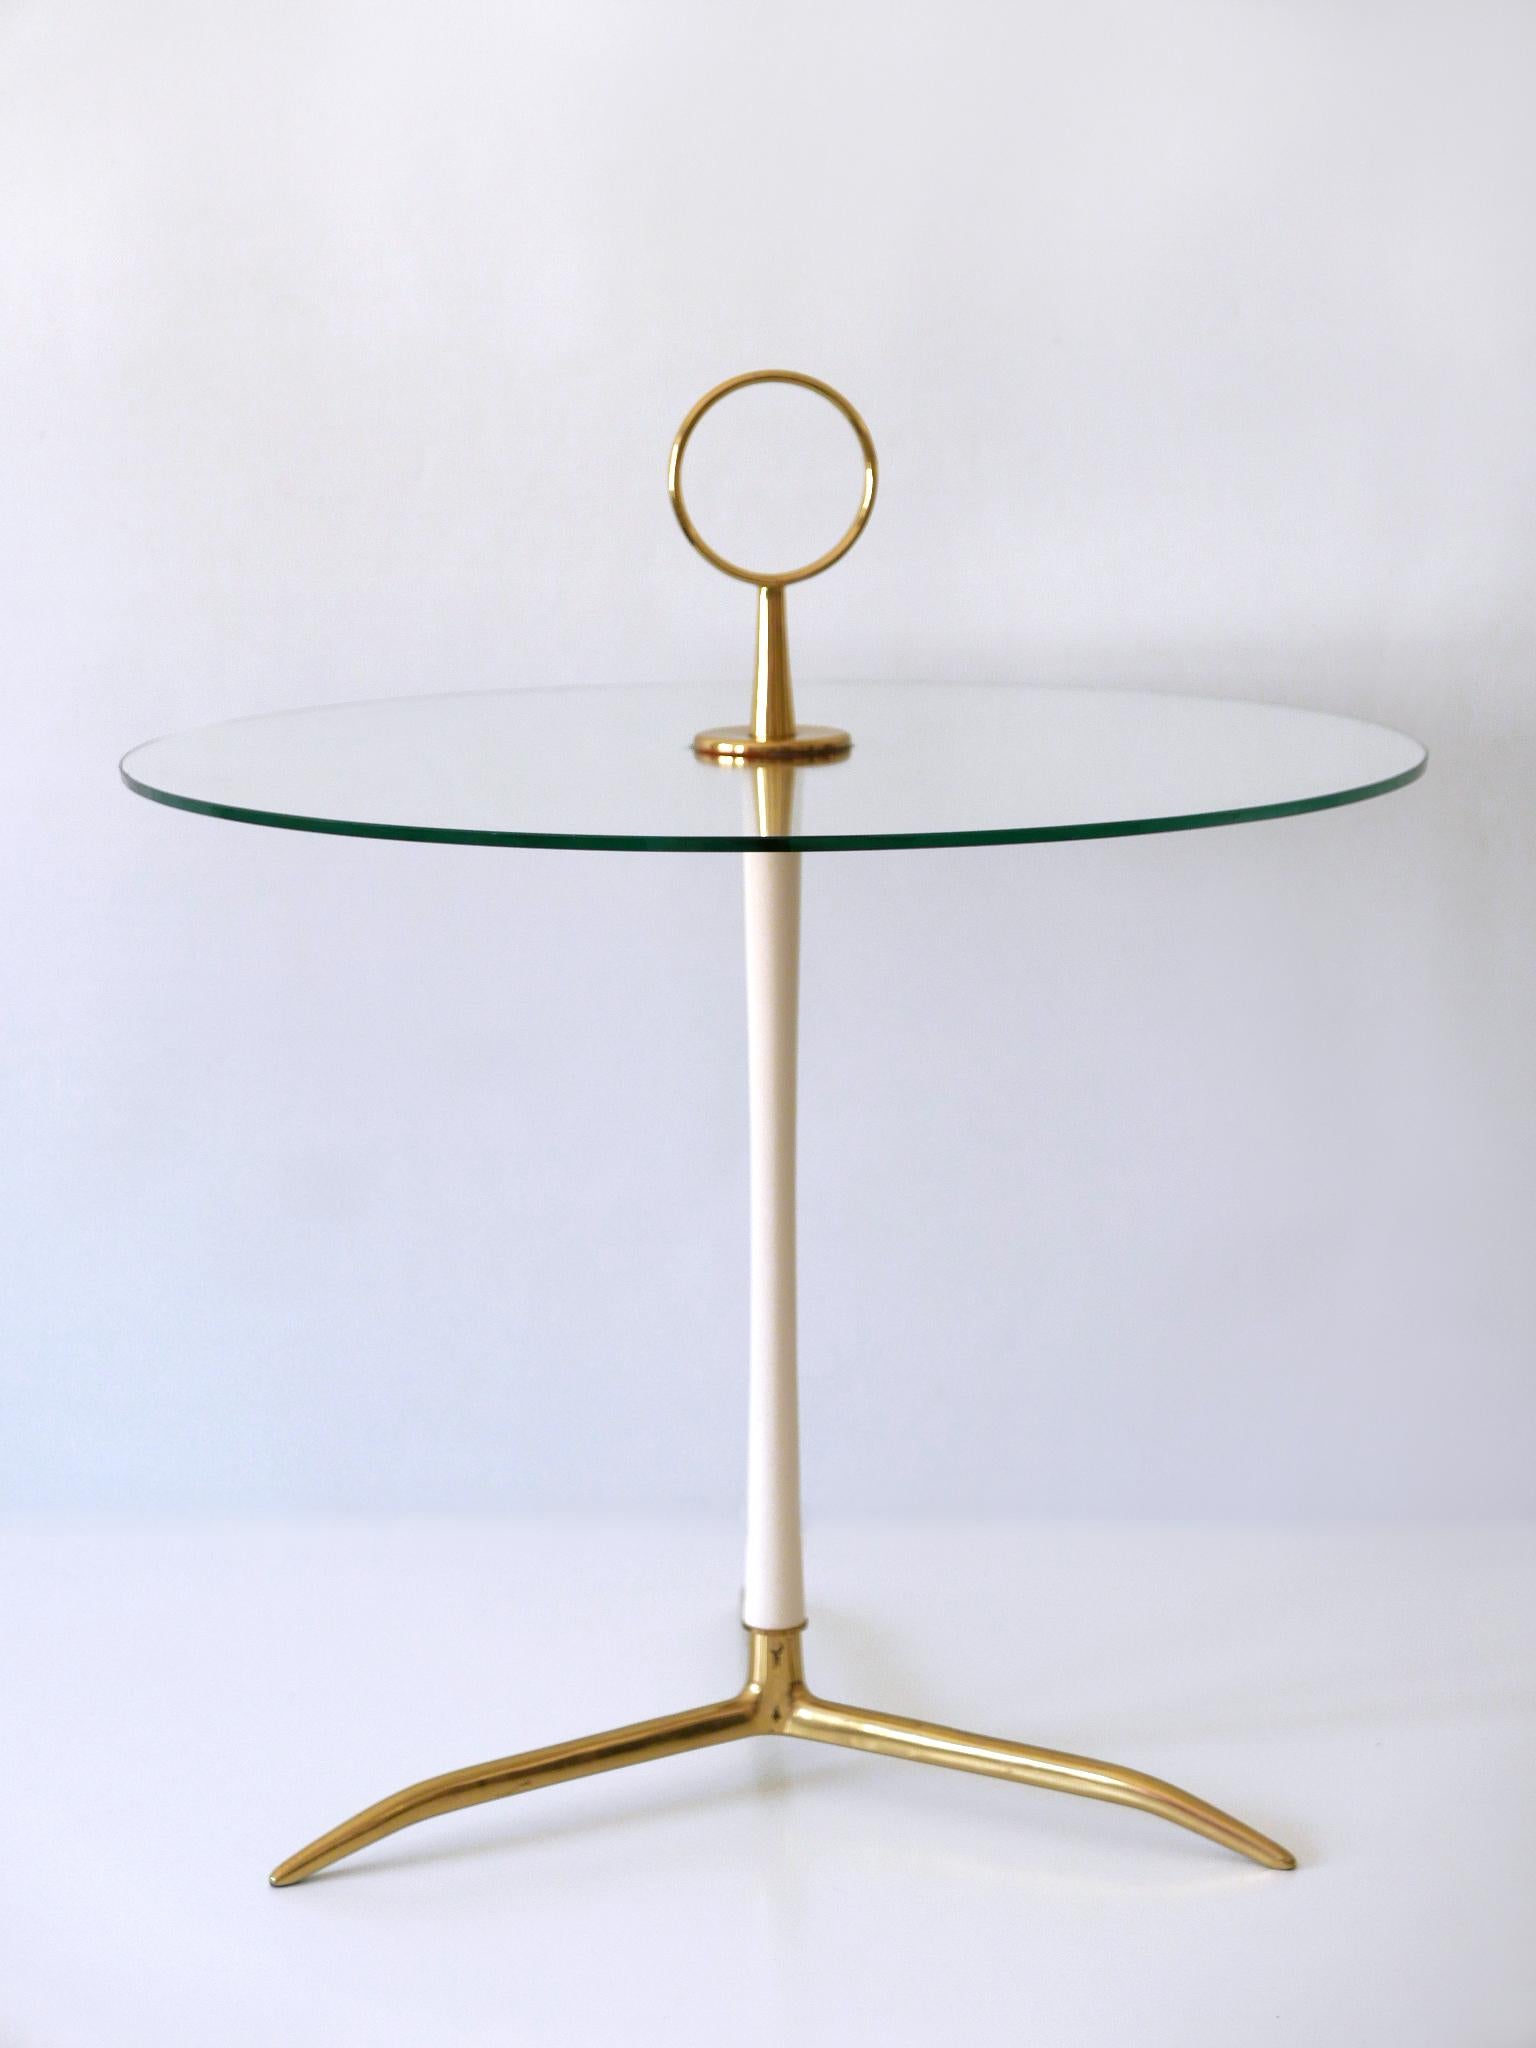 Elegant Mid-Century Modern Side Table by Vereinigte Werkstätten Germany 1950s For Sale 8